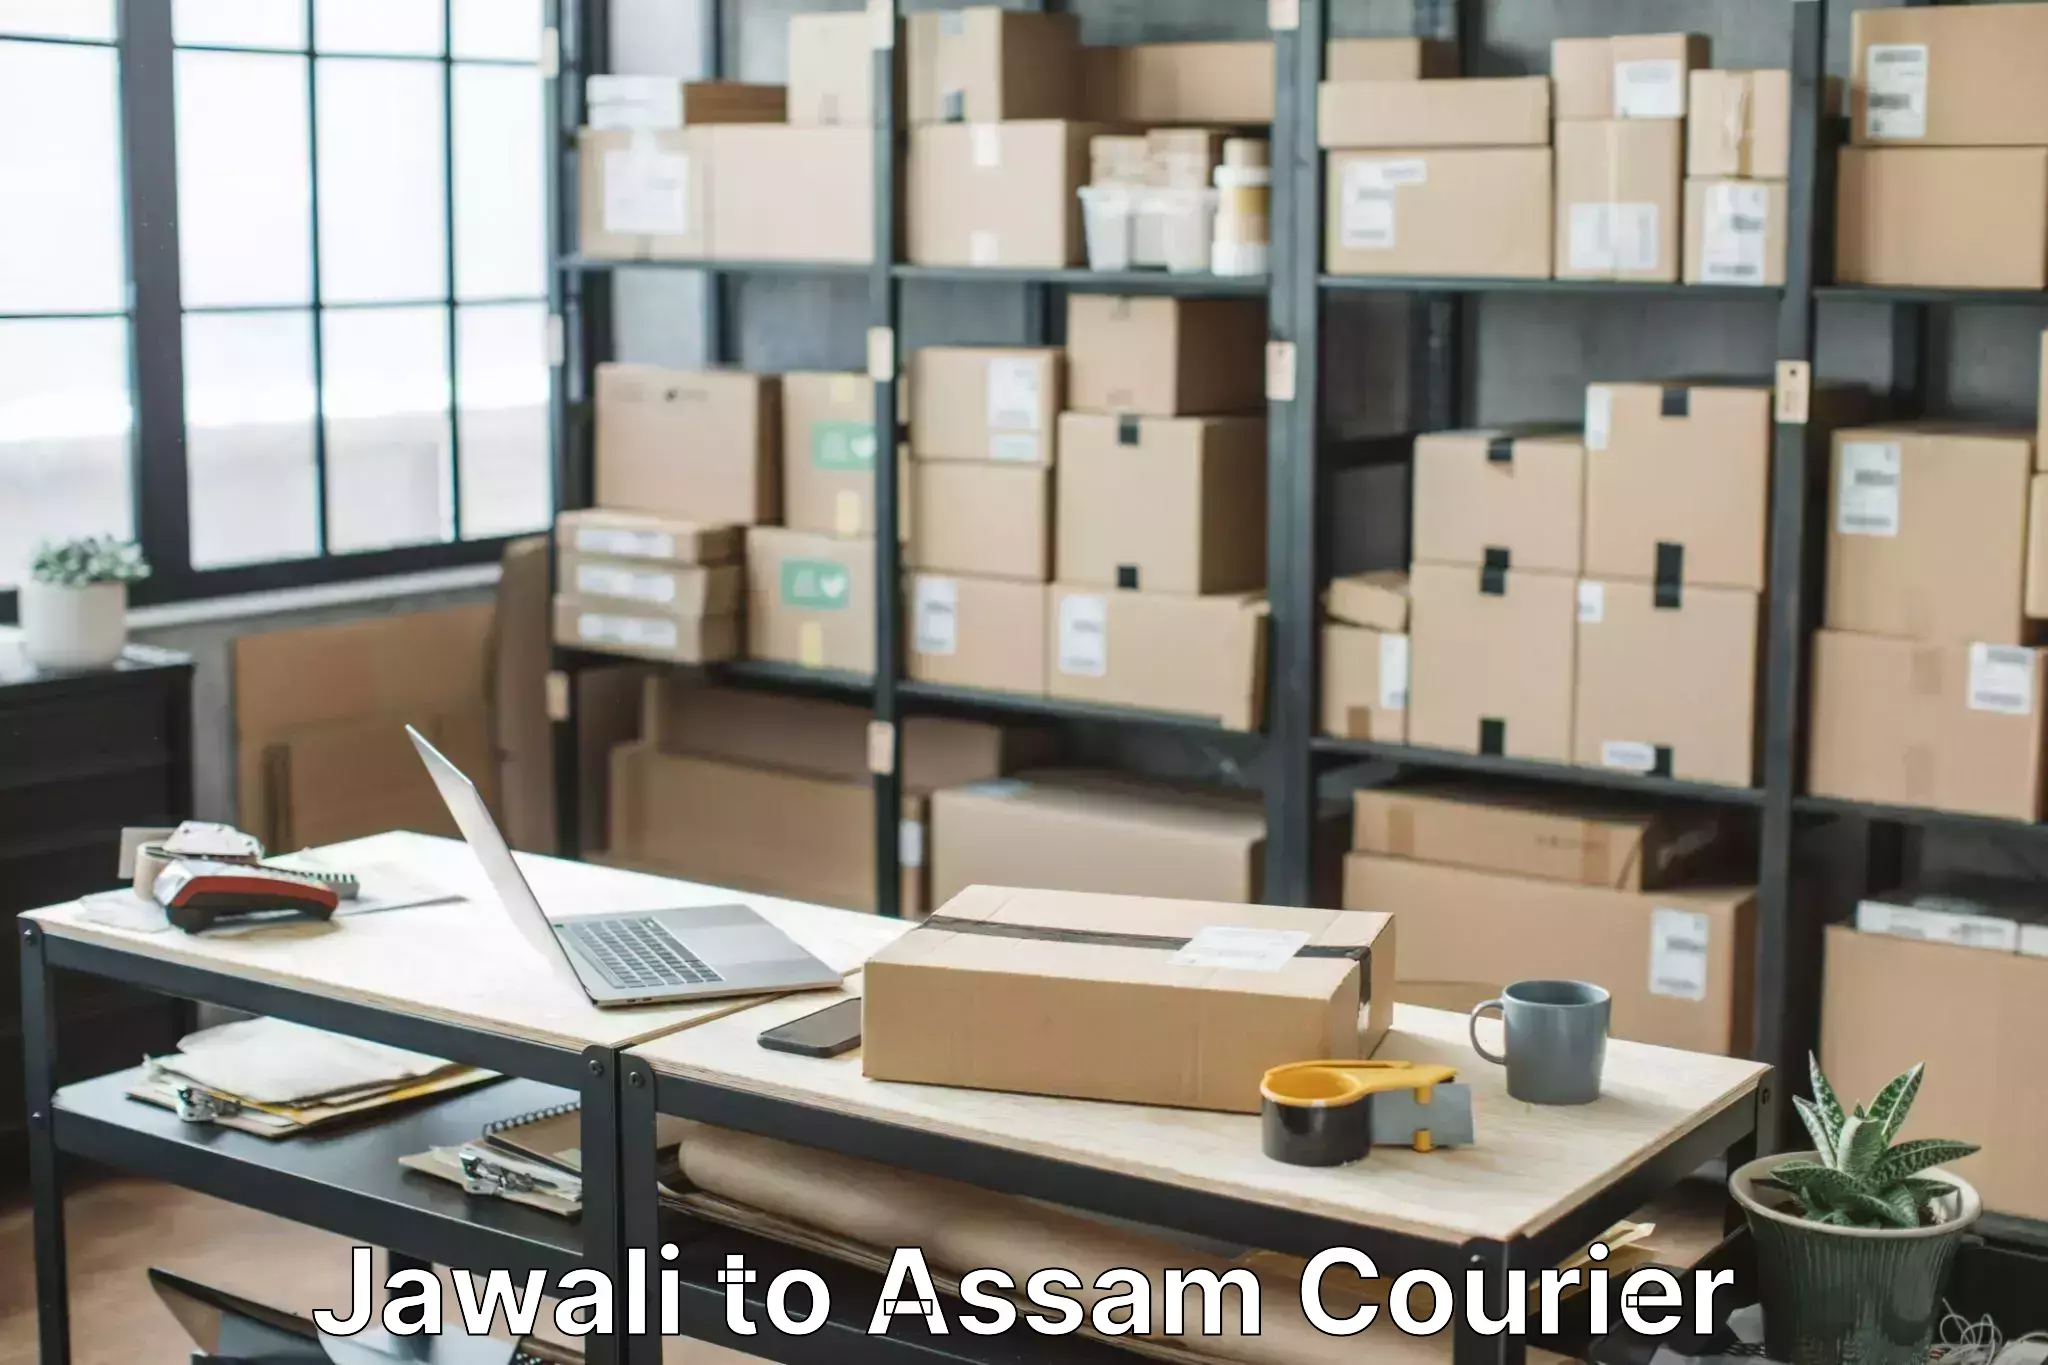 Budget-friendly movers Jawali to Lala Assam